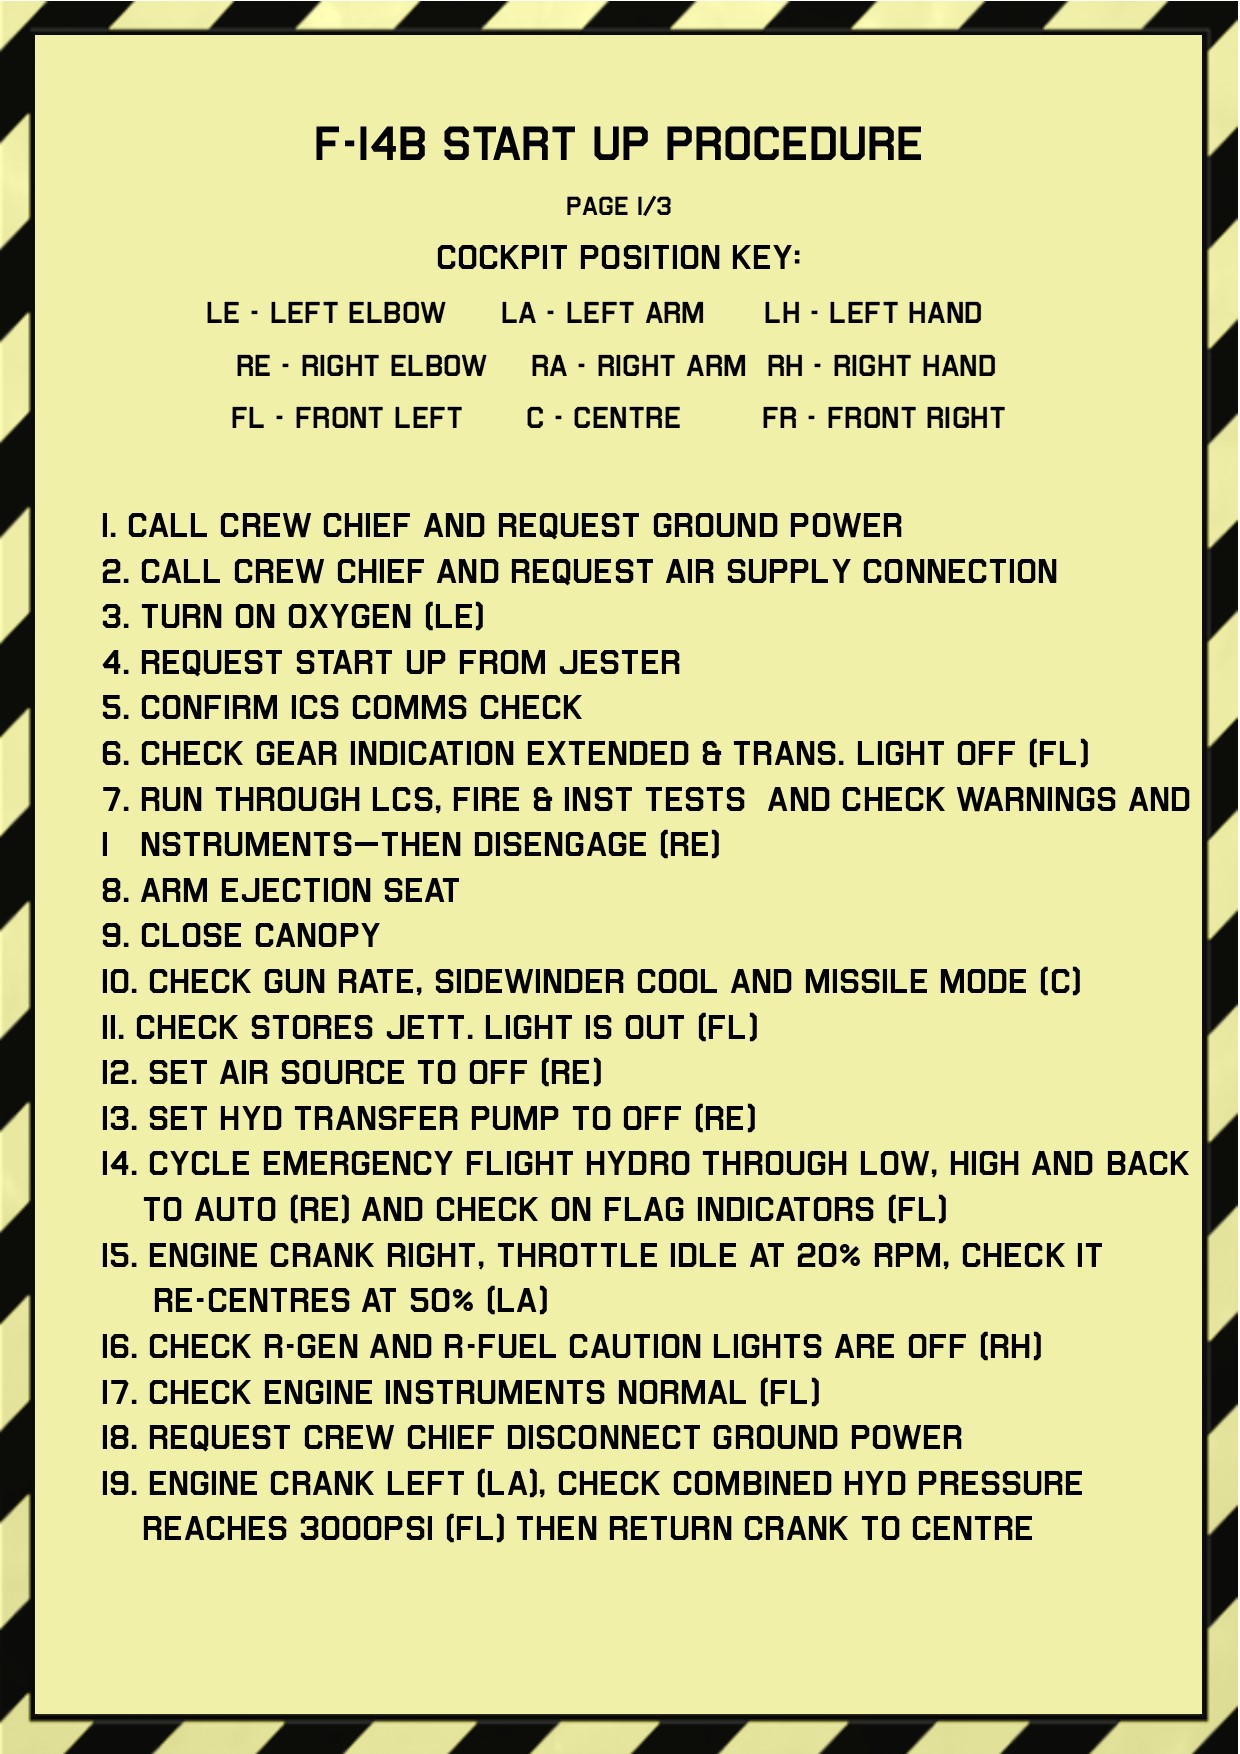 Start-up checklists for F-14B Tomcat